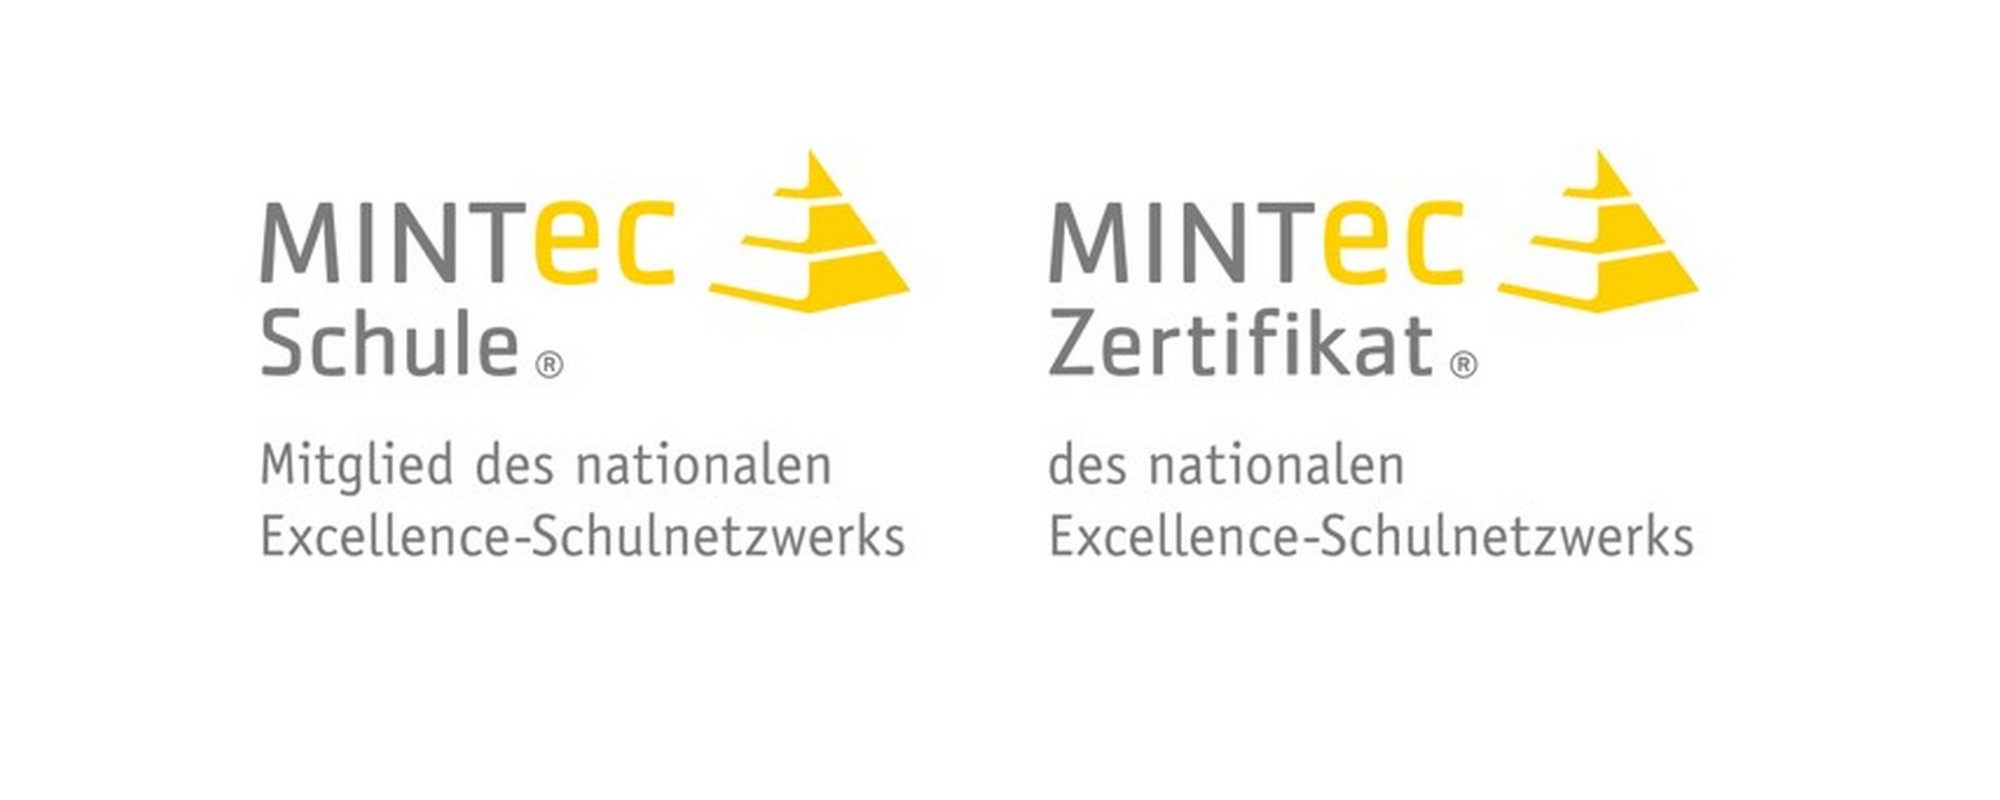 Das Ritze als MINT-EC Schule zertifiziert